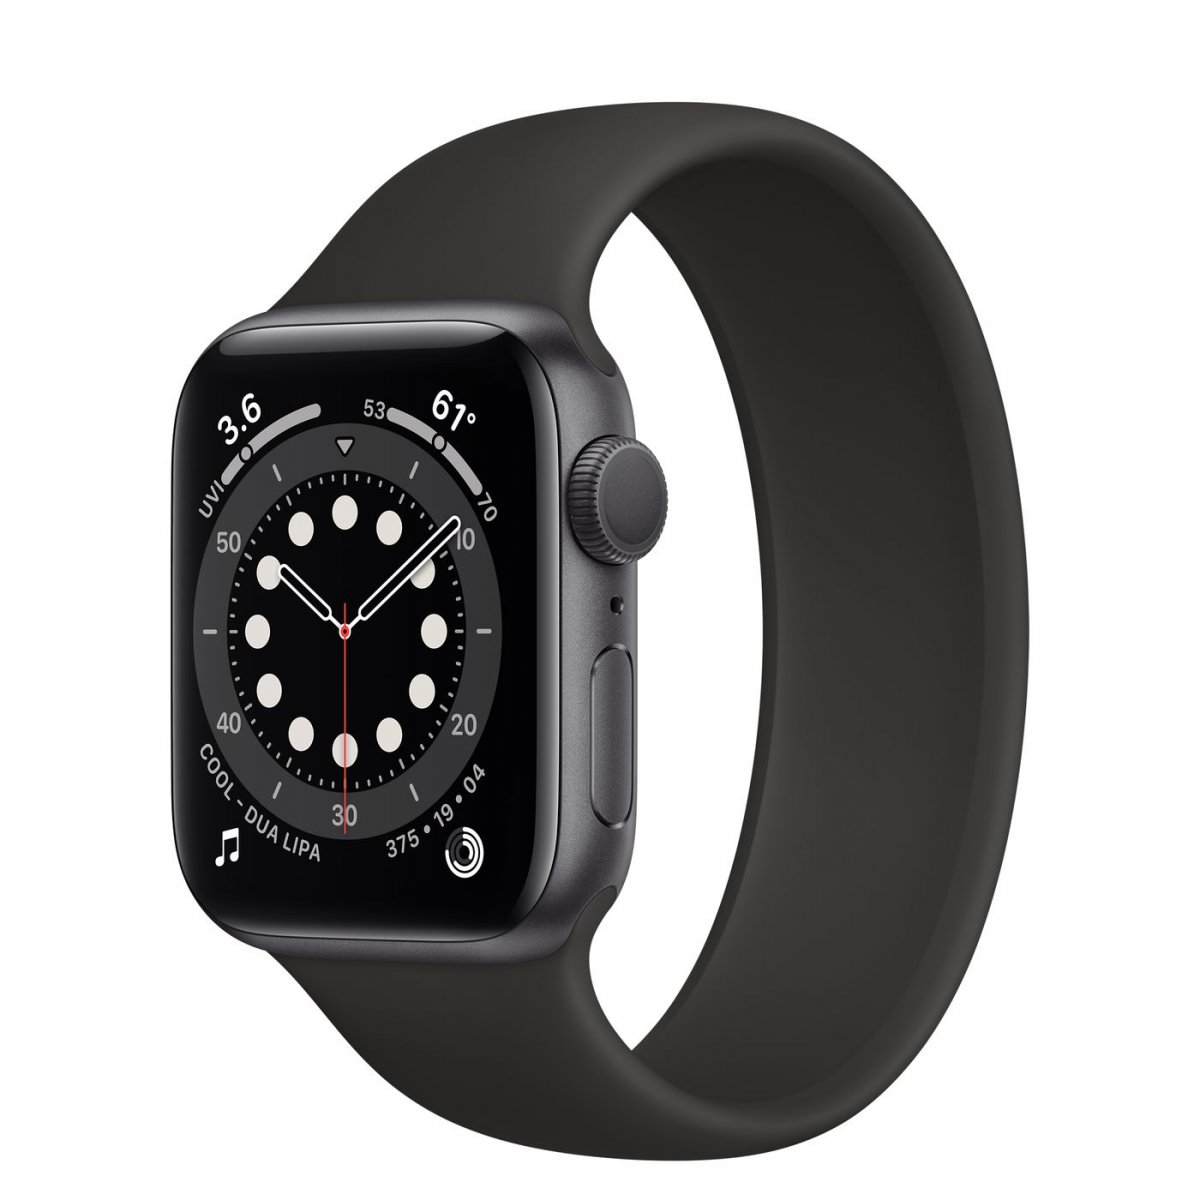 Řemínek iMore Solo Loop Apple Watch Series 1/2/3 42mm - Černá (XS)